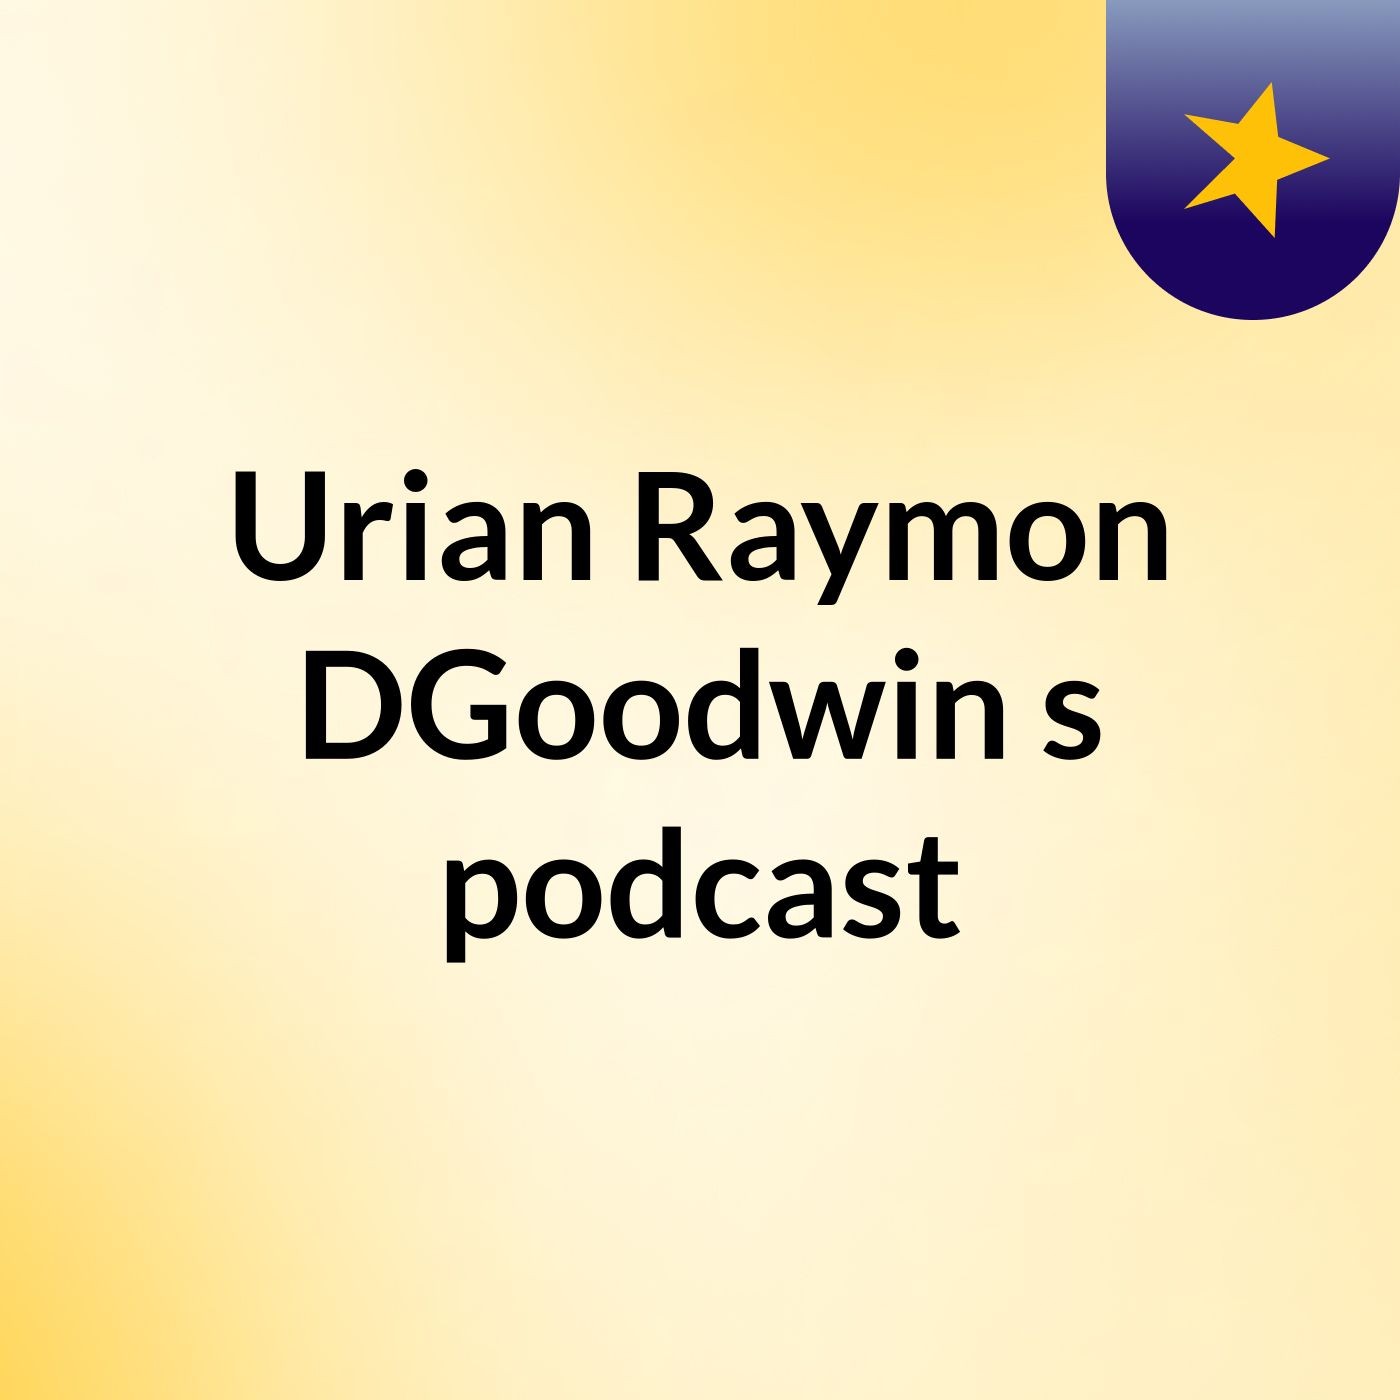 Episode 2 - Urian Raymon DGoodwin's podcast That DJ 3$co Show